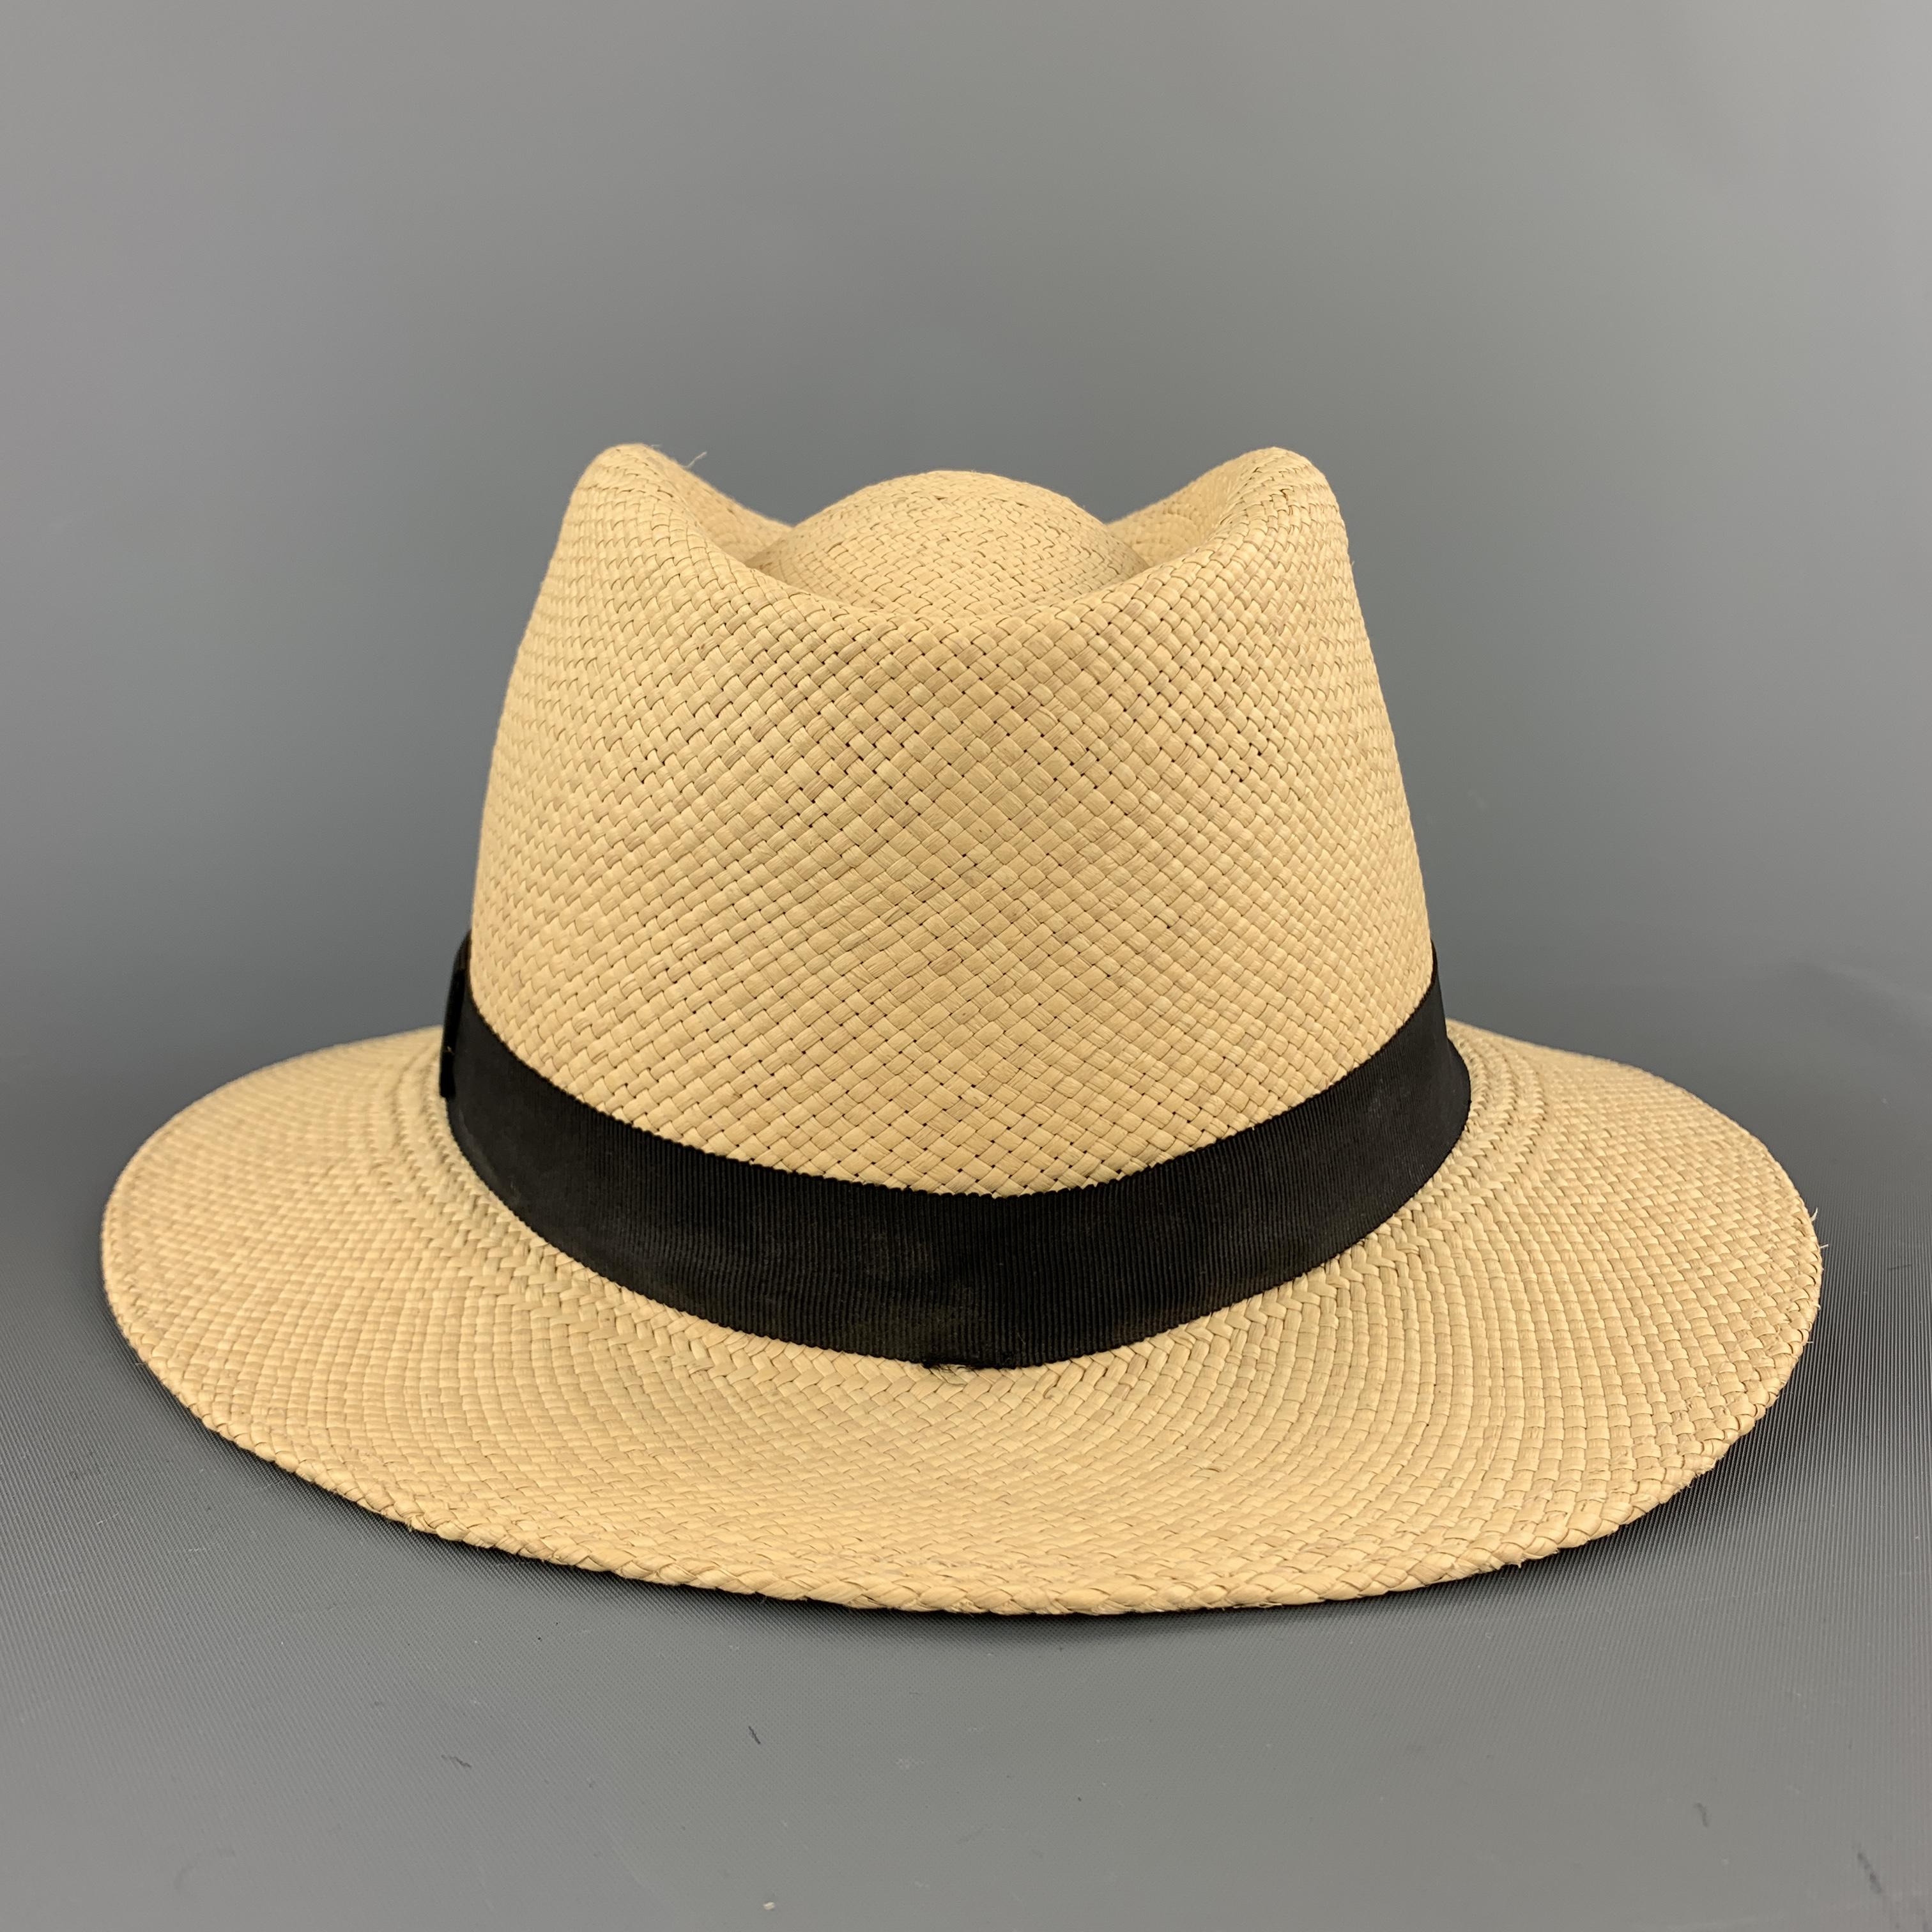 cuban straw hats